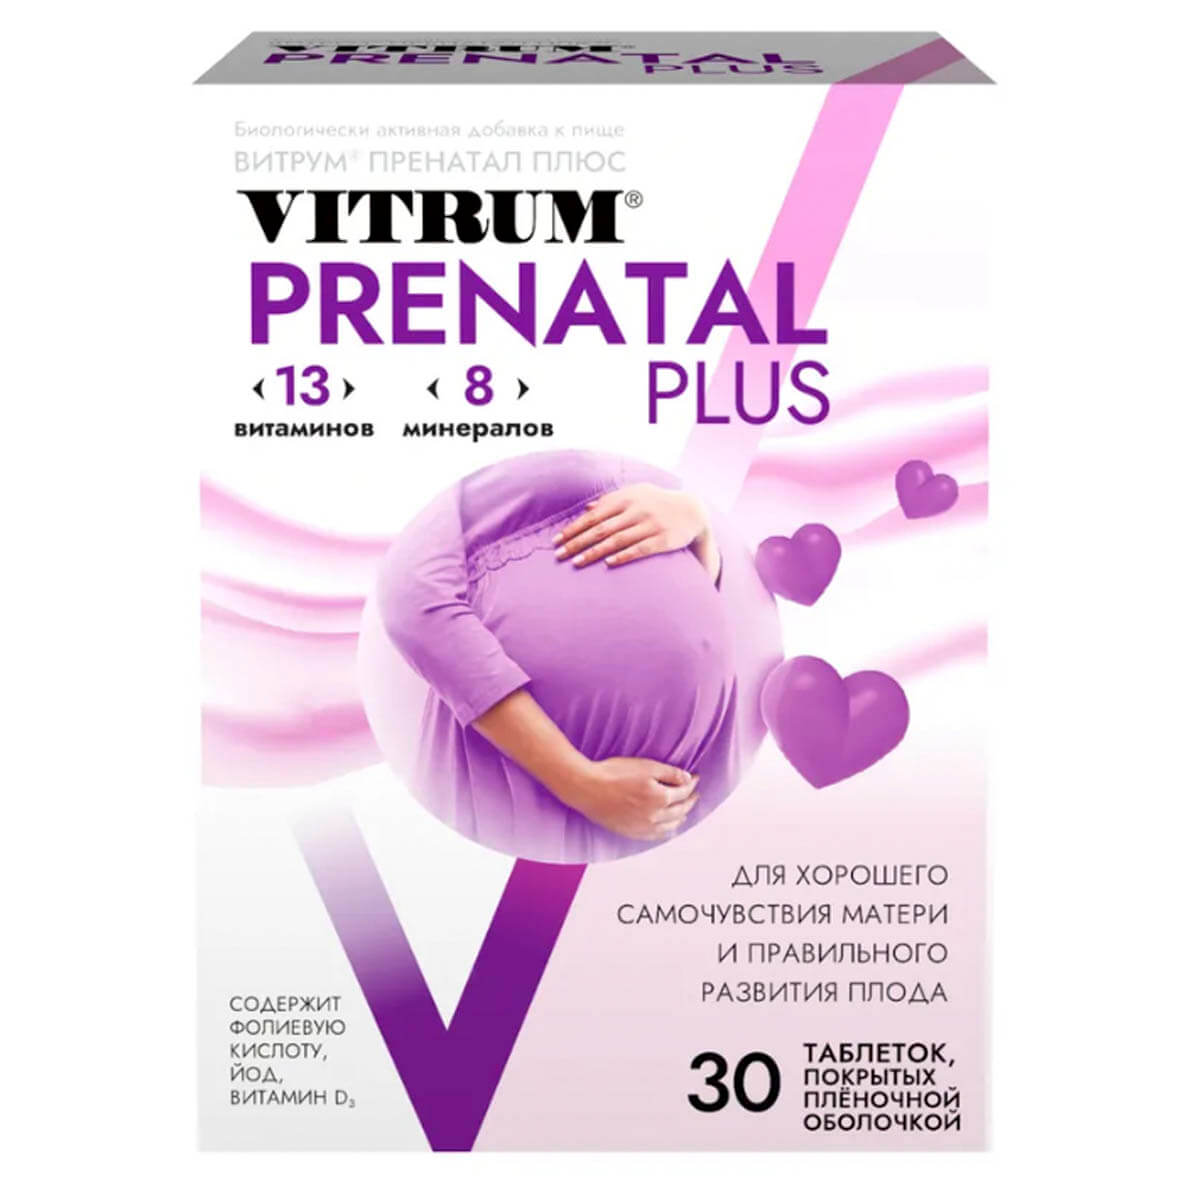 Комплекс витаминов Prenatal Plus для беременных, 30 таблеток, Vitrum, Витрум  - купить